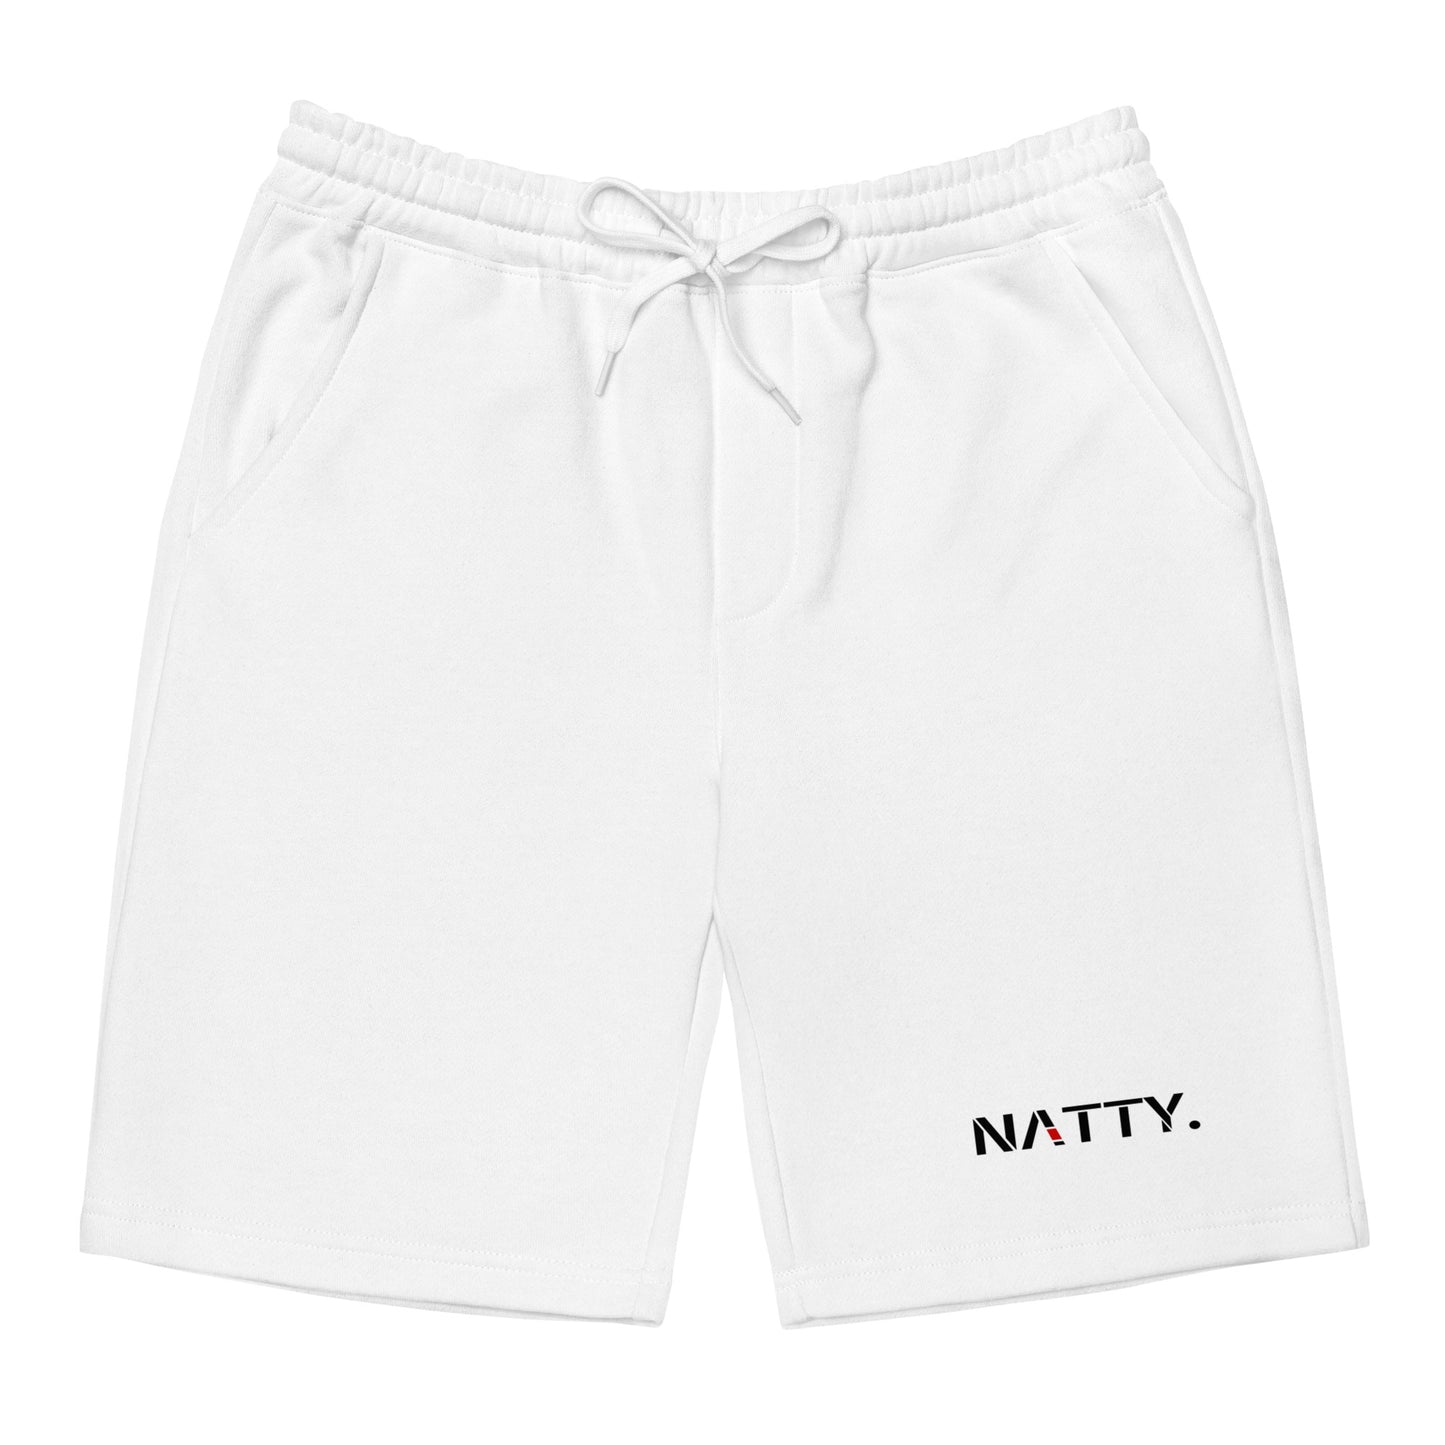 Signature NATTY. Logo Fleece Shorts